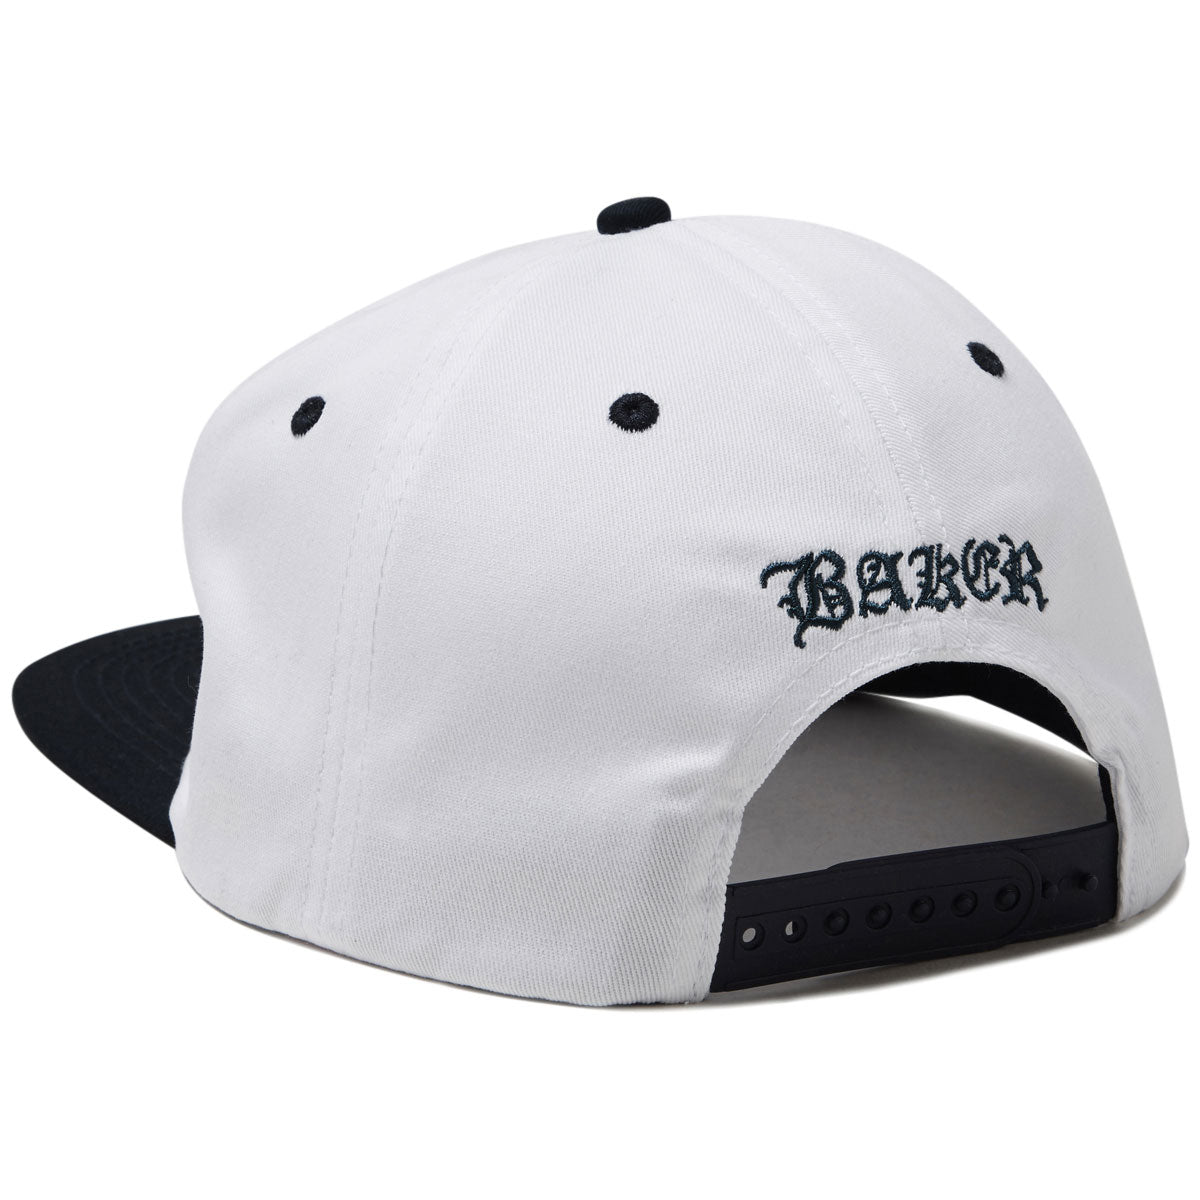 Baker Big B Snapback Hat - White/Navy image 2